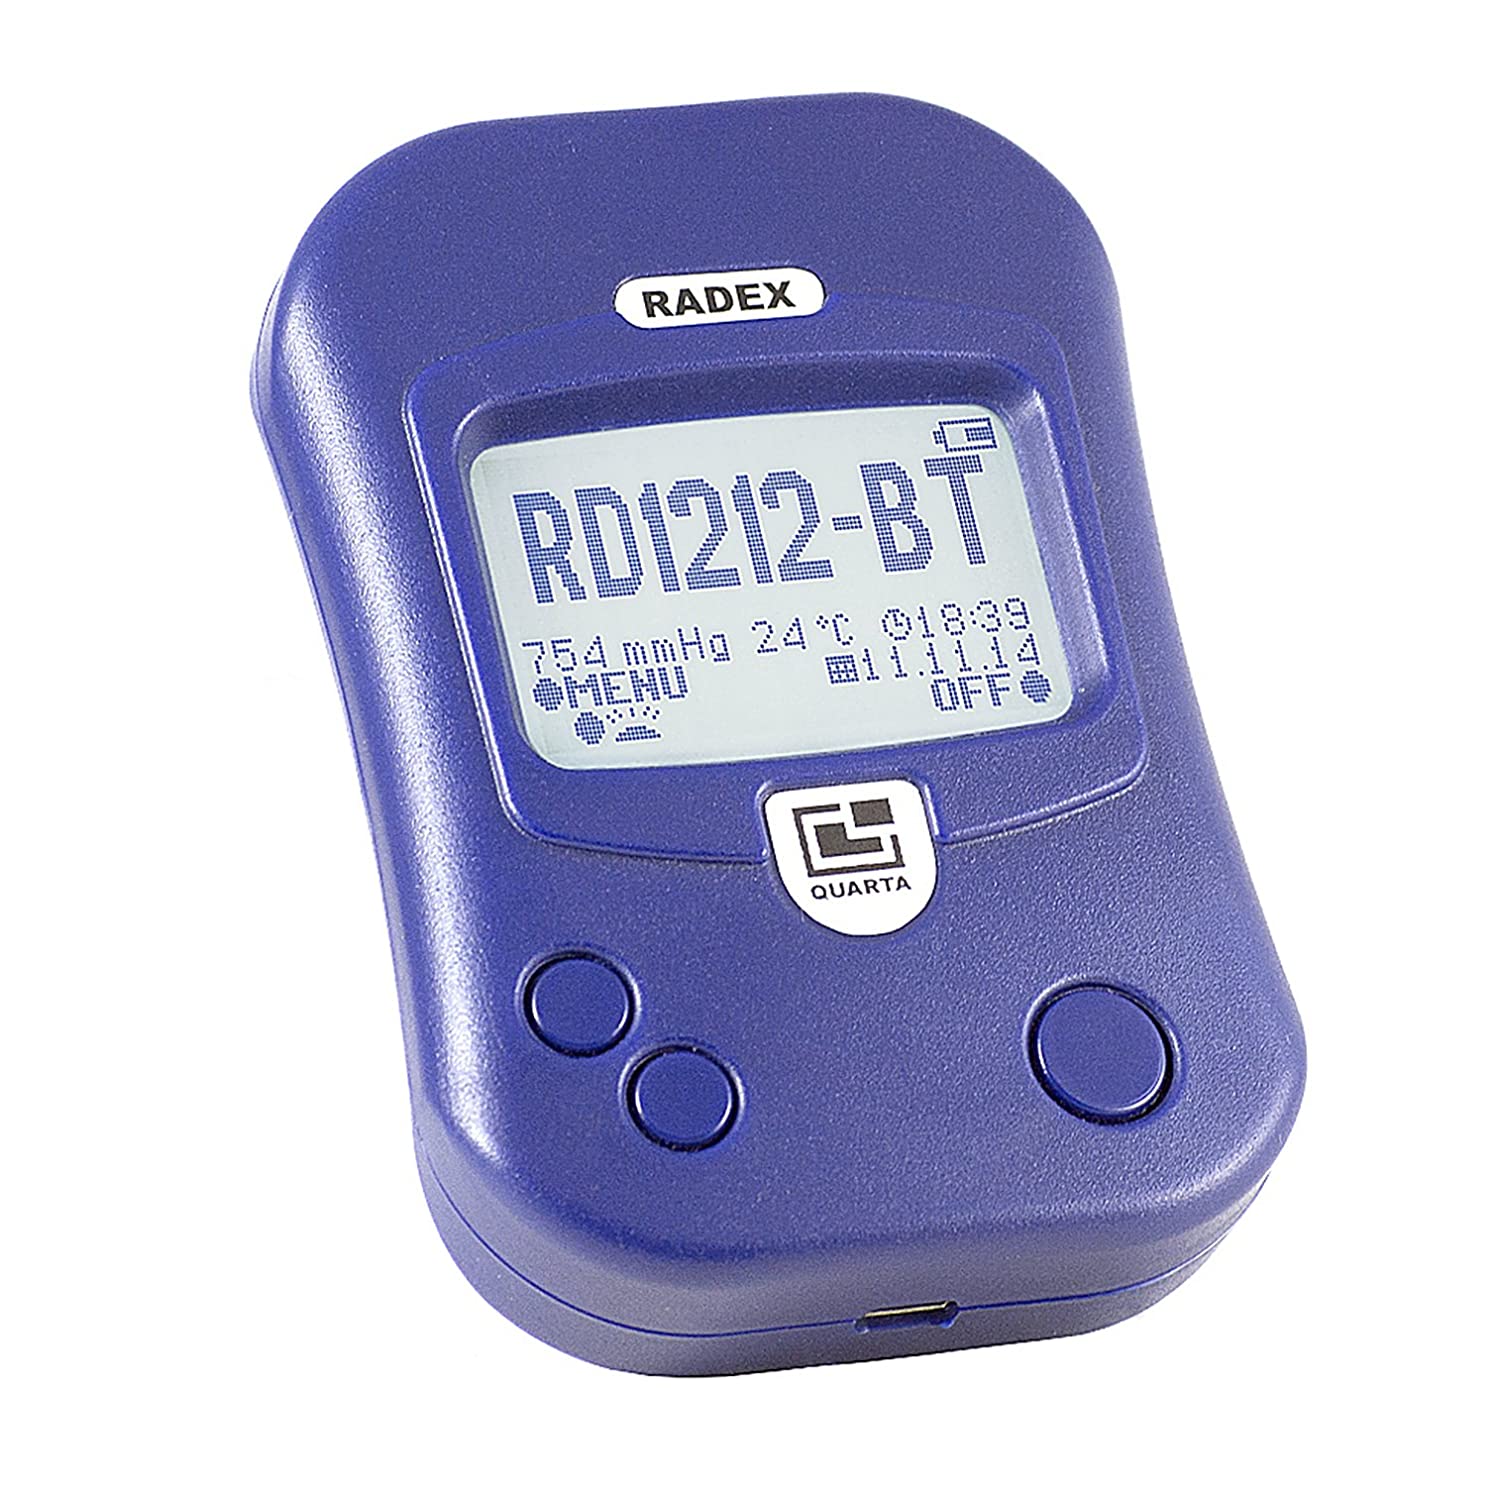 RADEX RD1212-BT Geiger Counter, Radiation Meter with Bluetooth